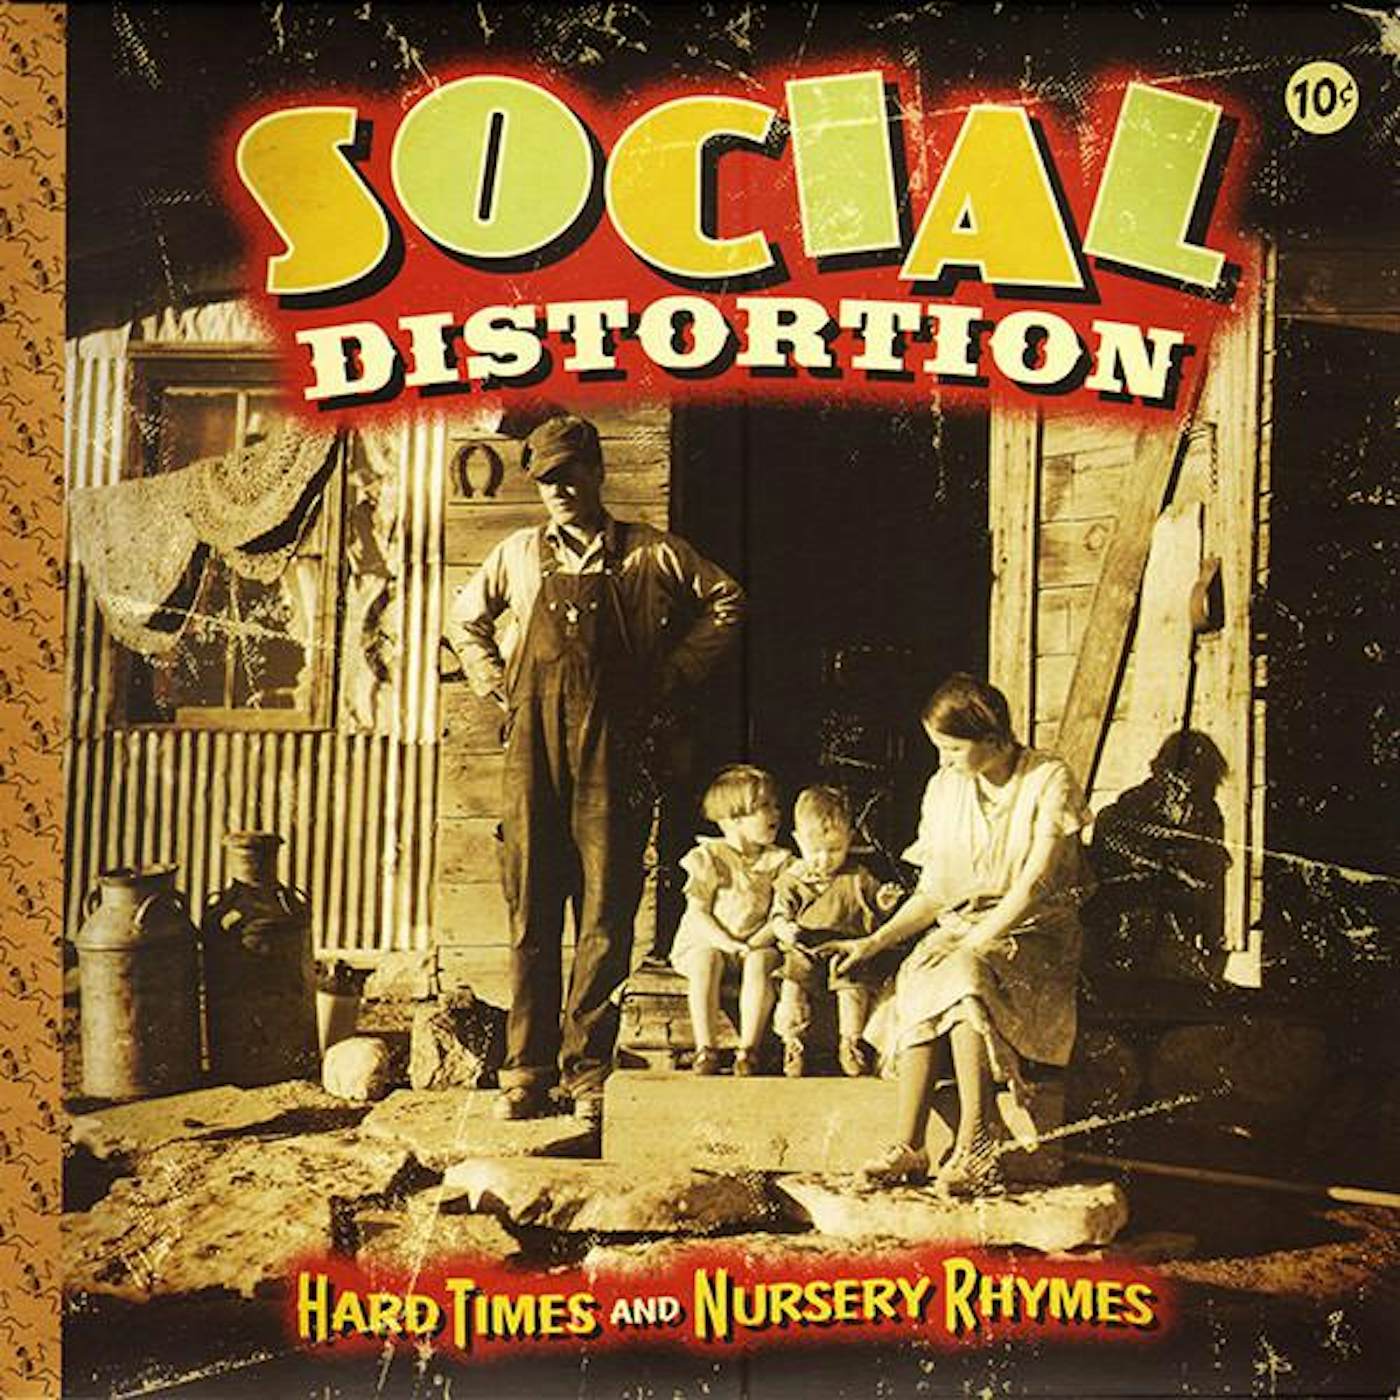 Social Distortion HARD TIMES & NURSERY RHYMES Vinyl Record